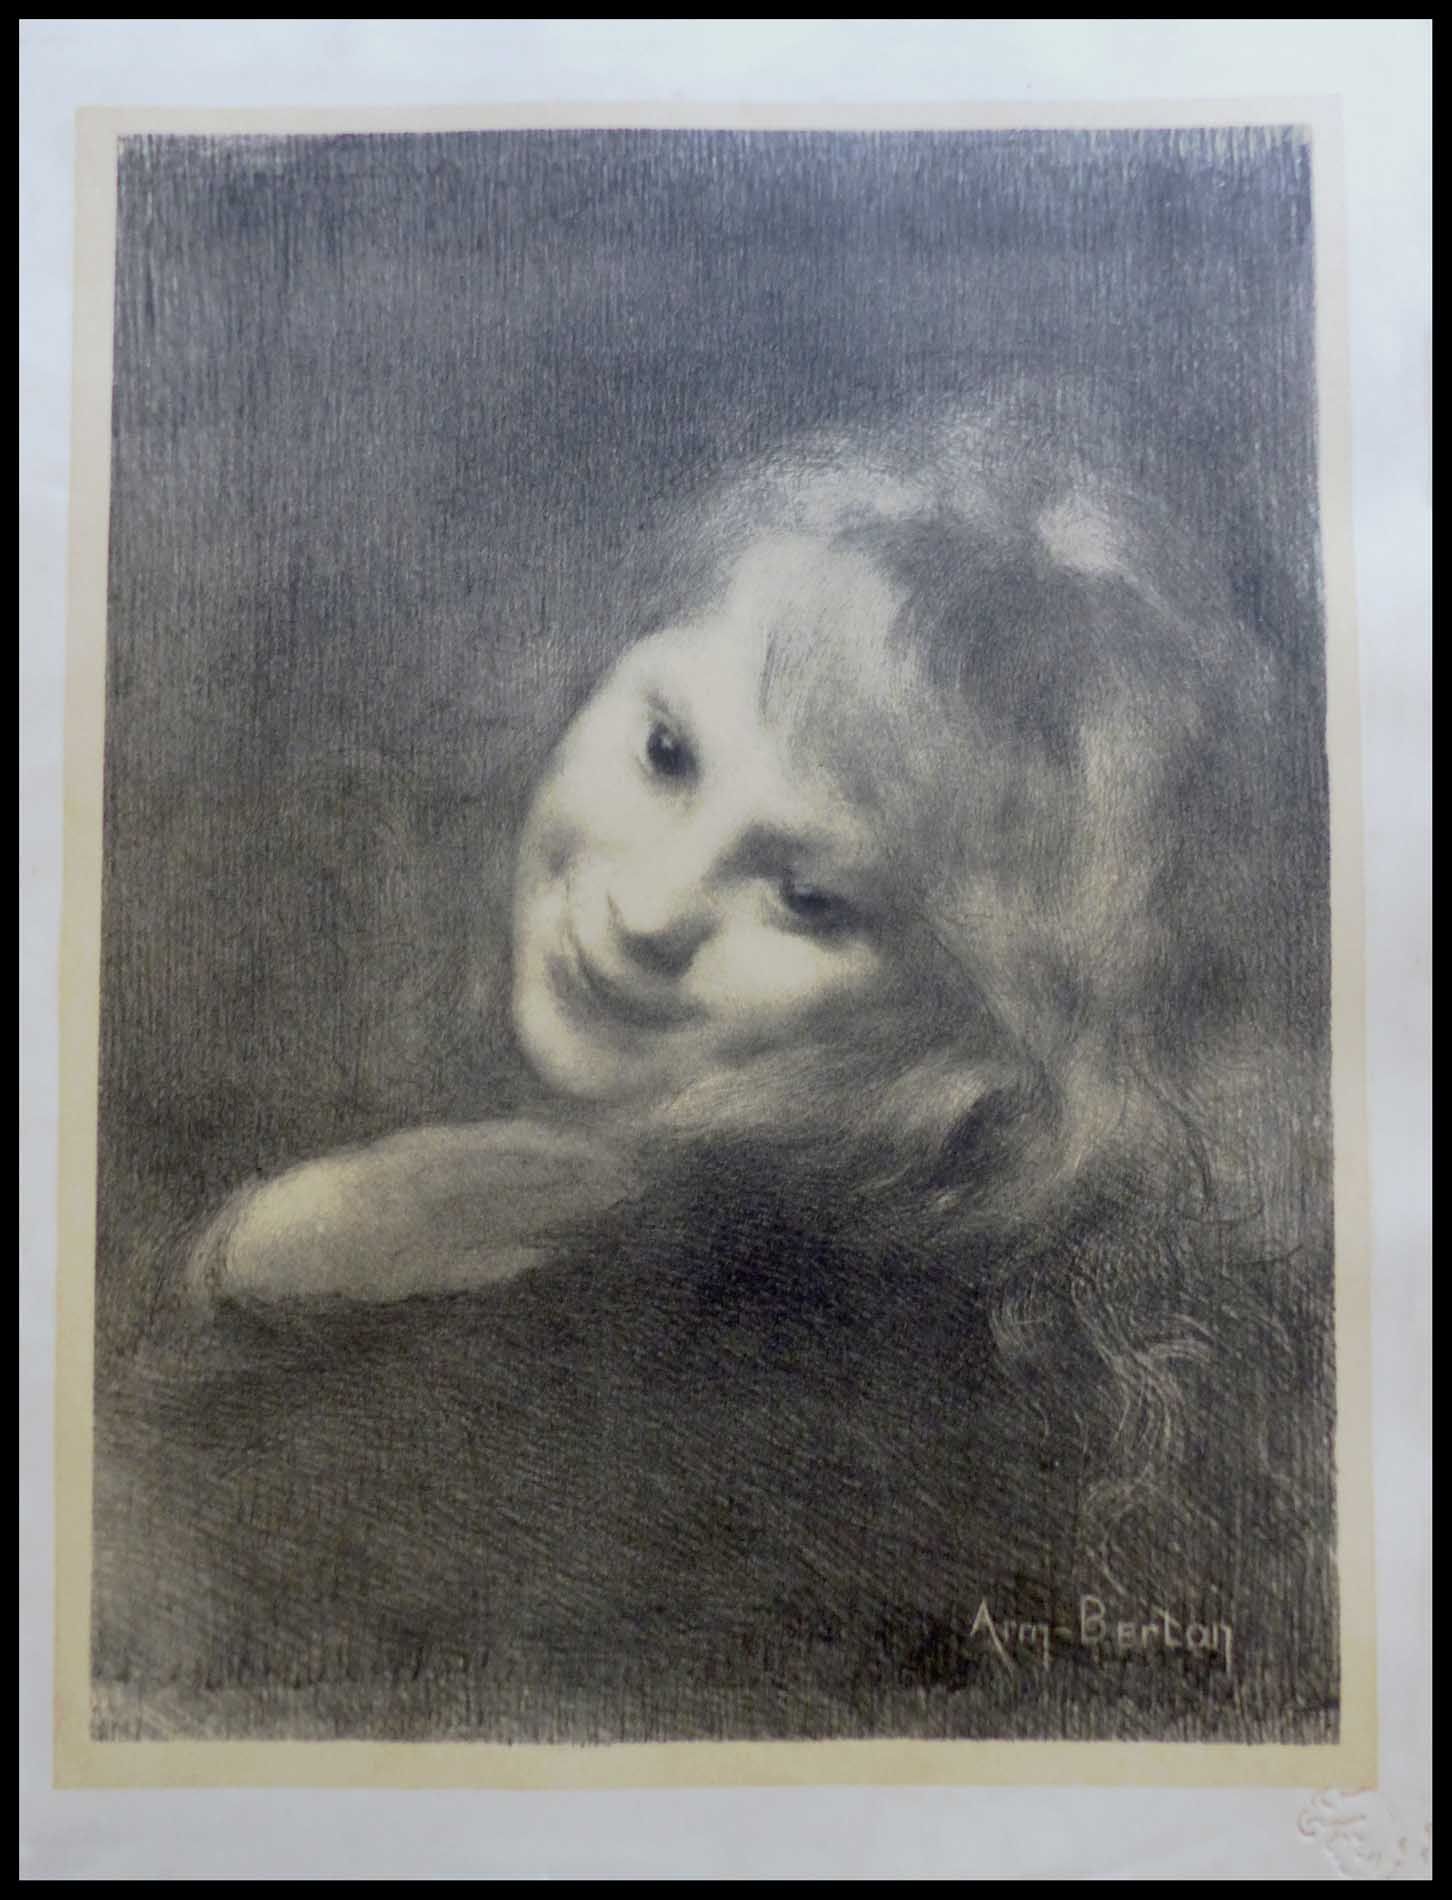 E. Frey Armand BERTON : (1864 - 1927)

RIEUSE

1897

Original-Lithographie

In d&hellip;